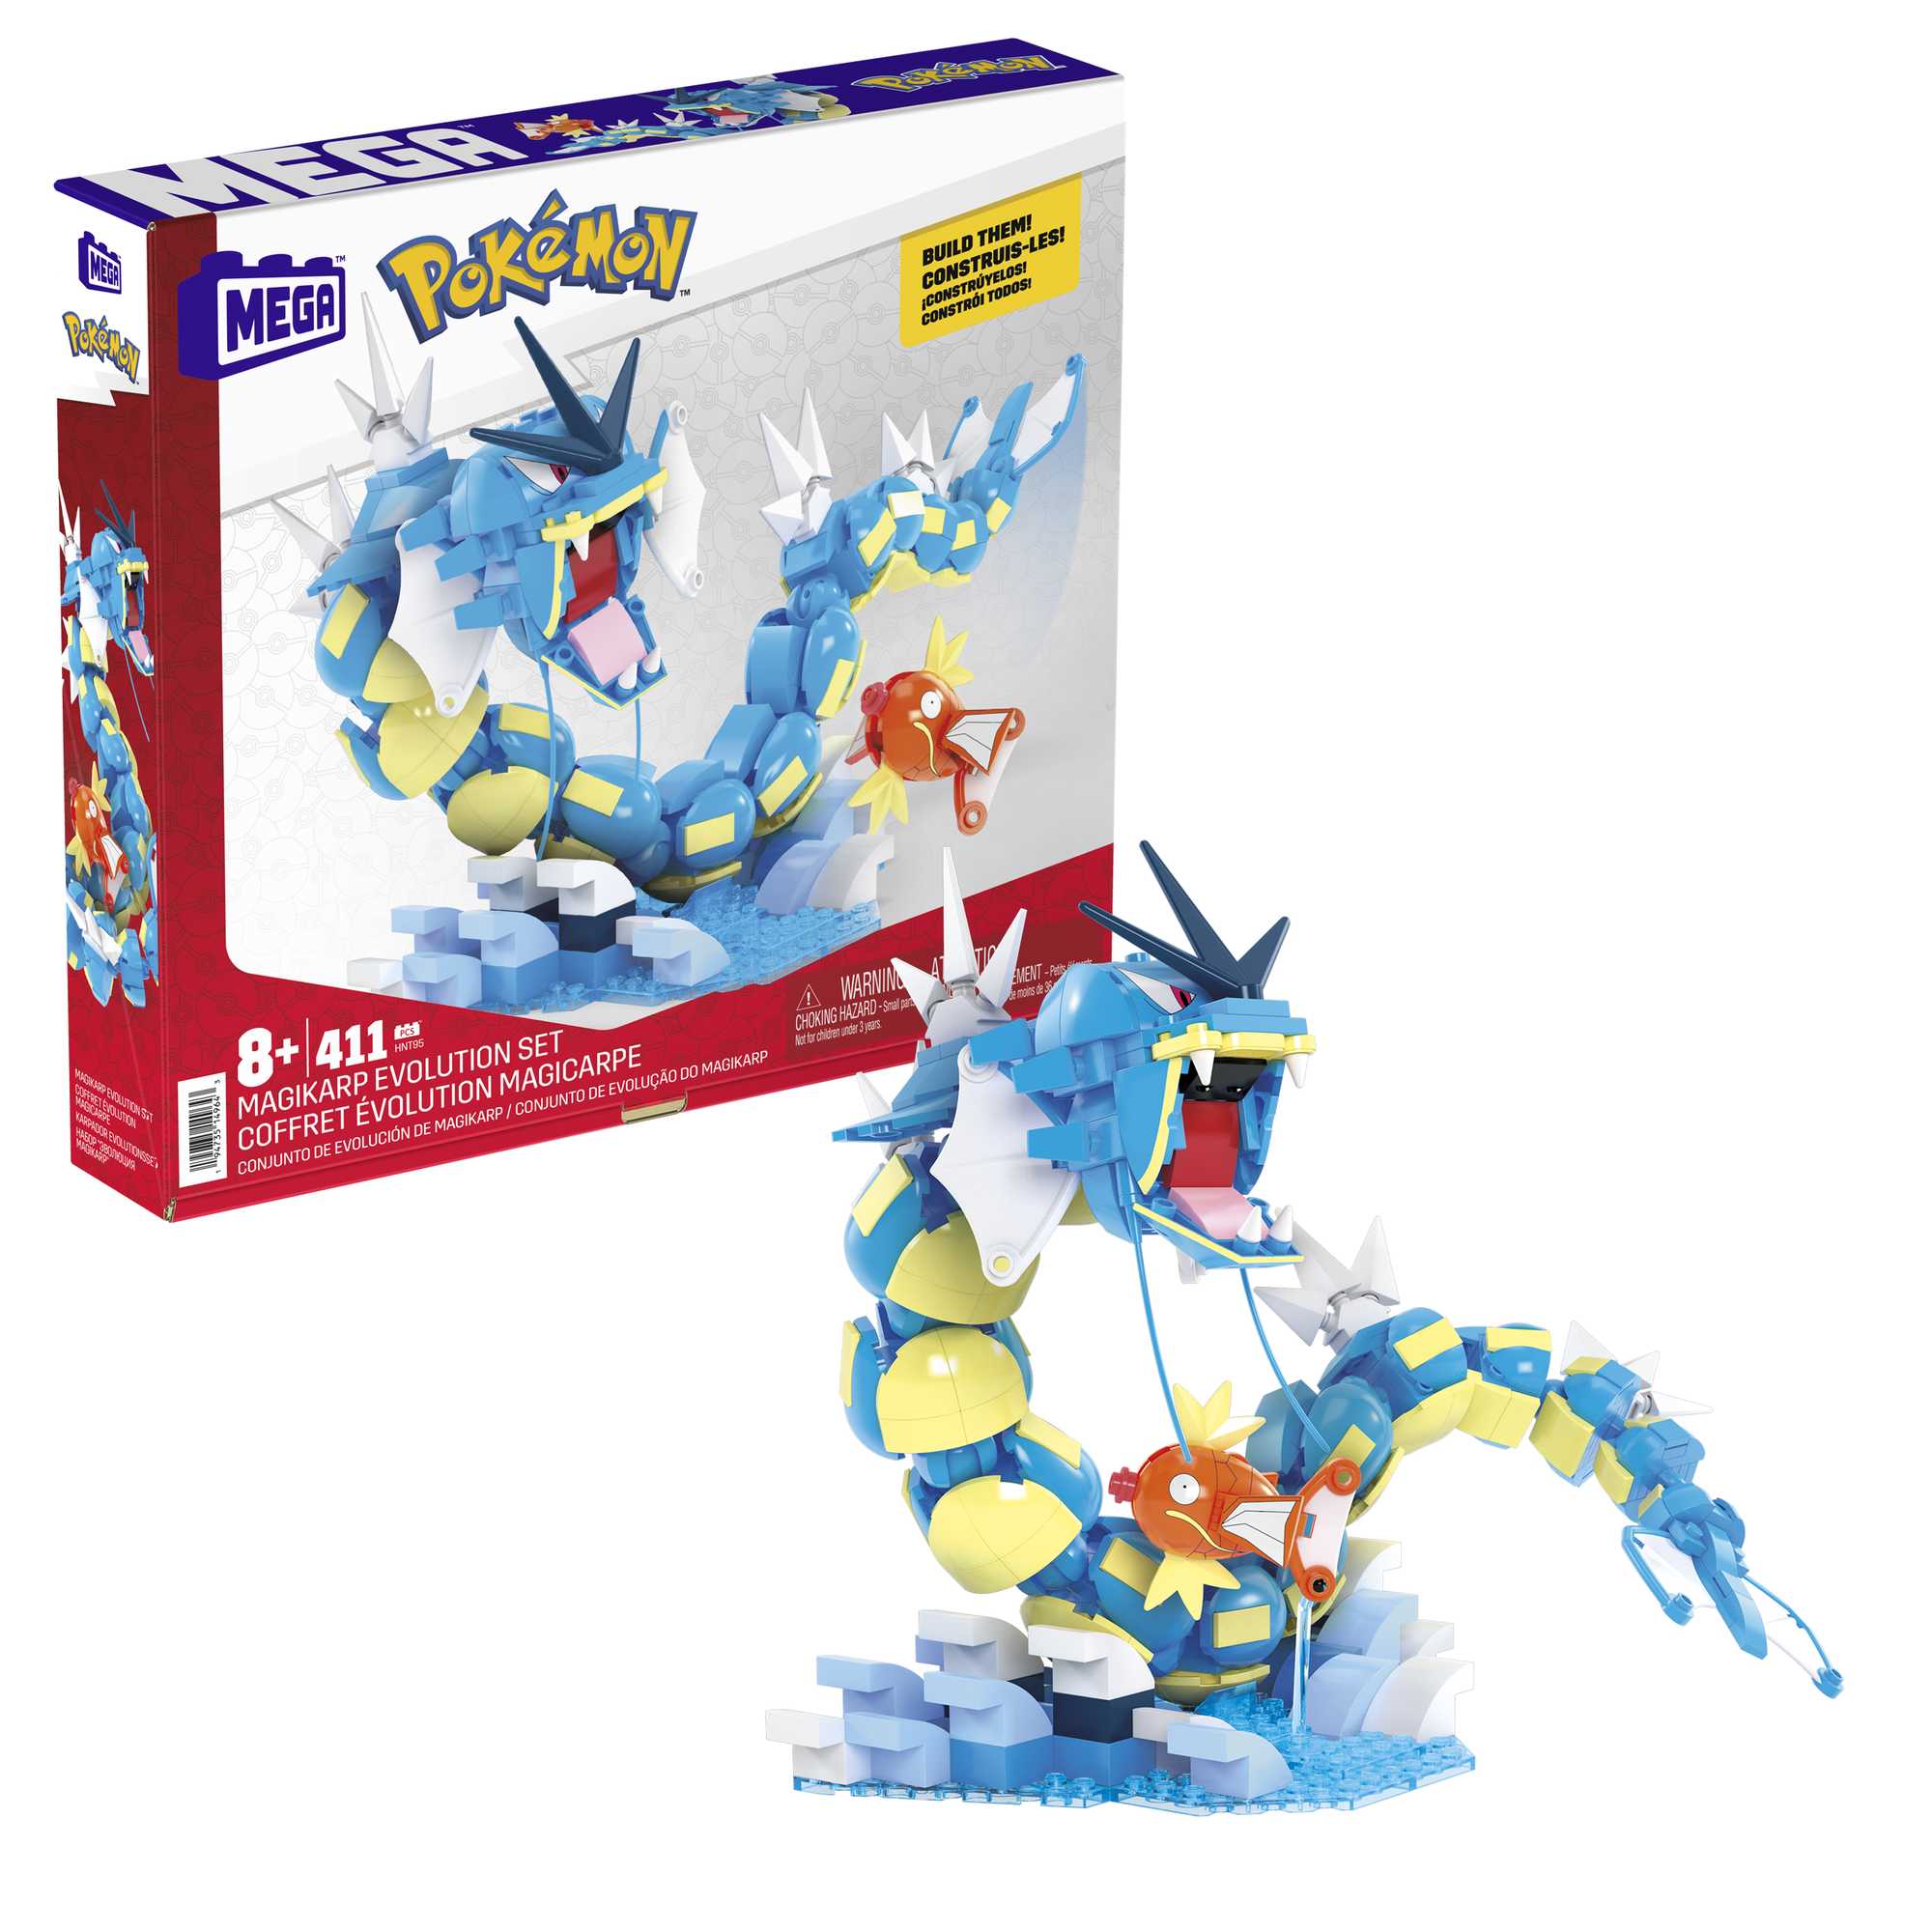 MEGA Pokemon Building Toy Kit Bulbasaur Set with 3 Action Figures (622  Pieces) for Kids